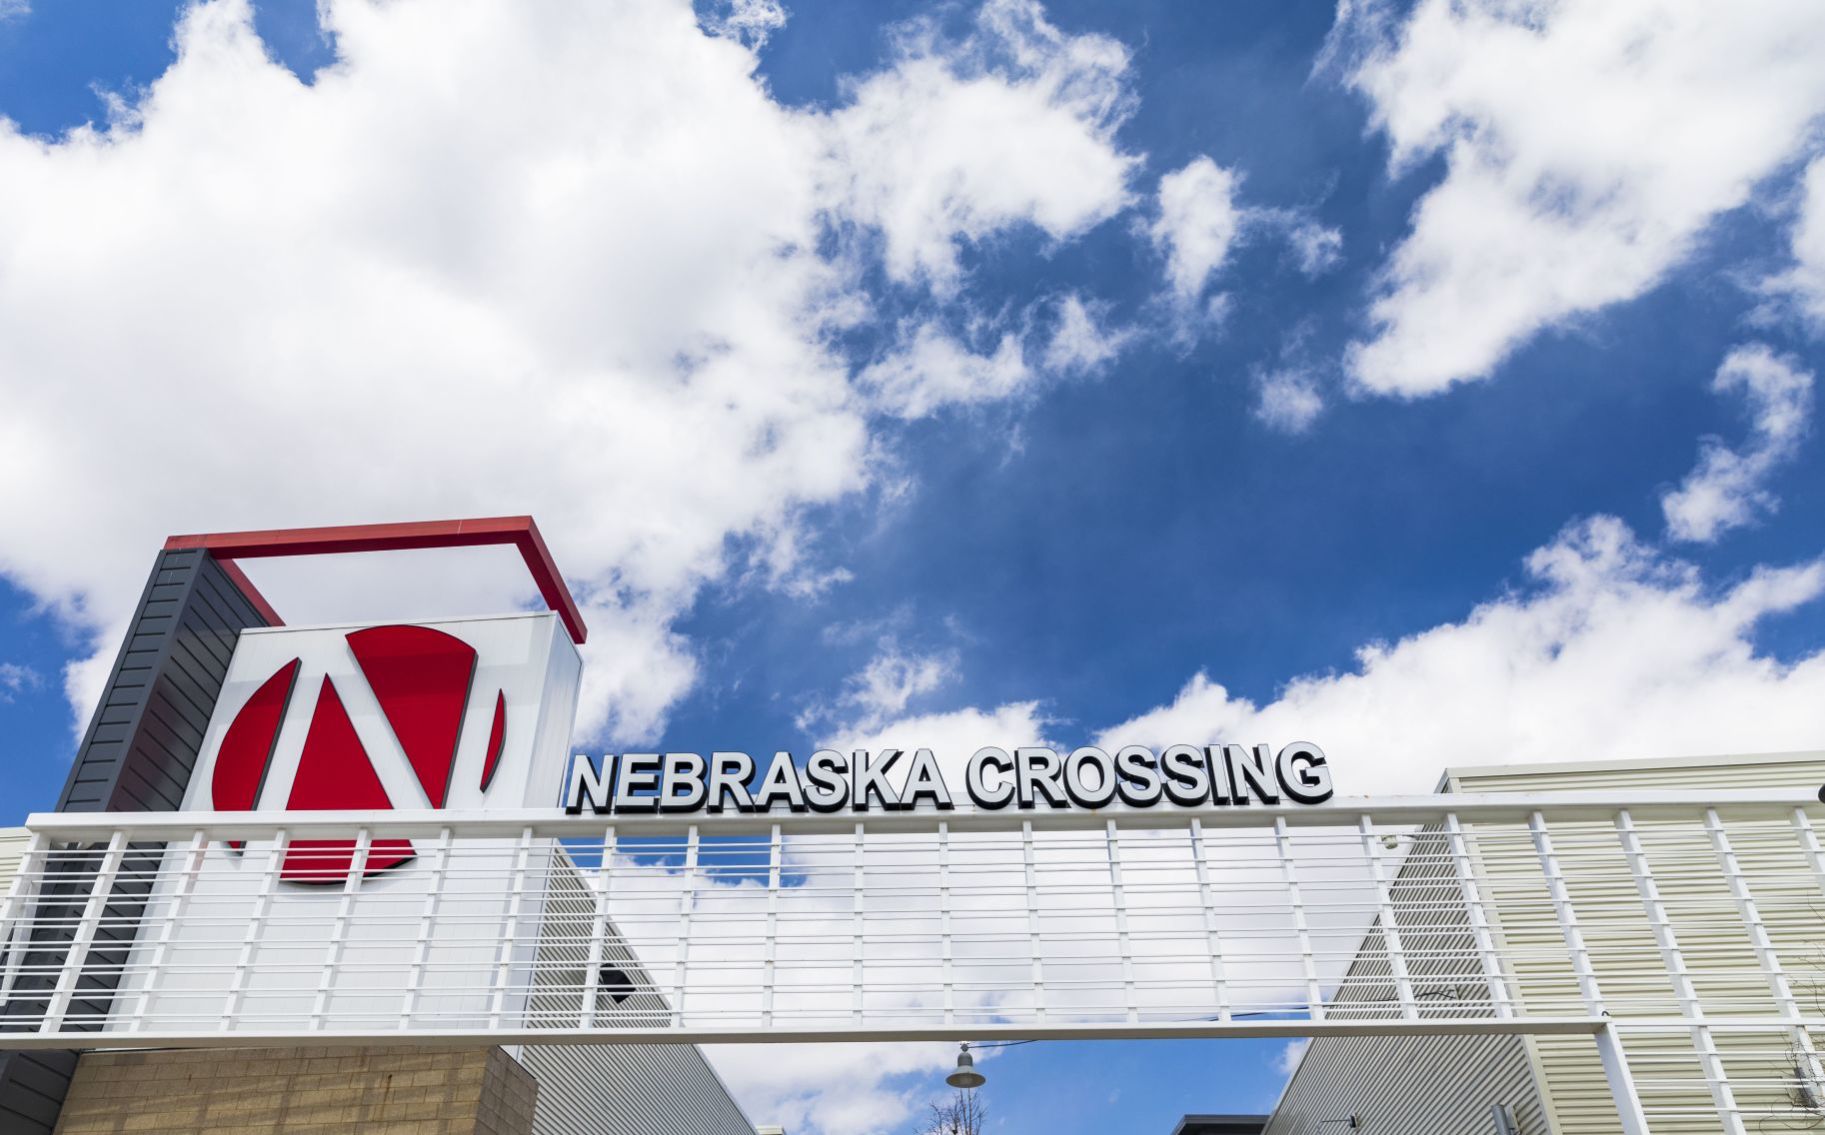 nike store nebraska crossing